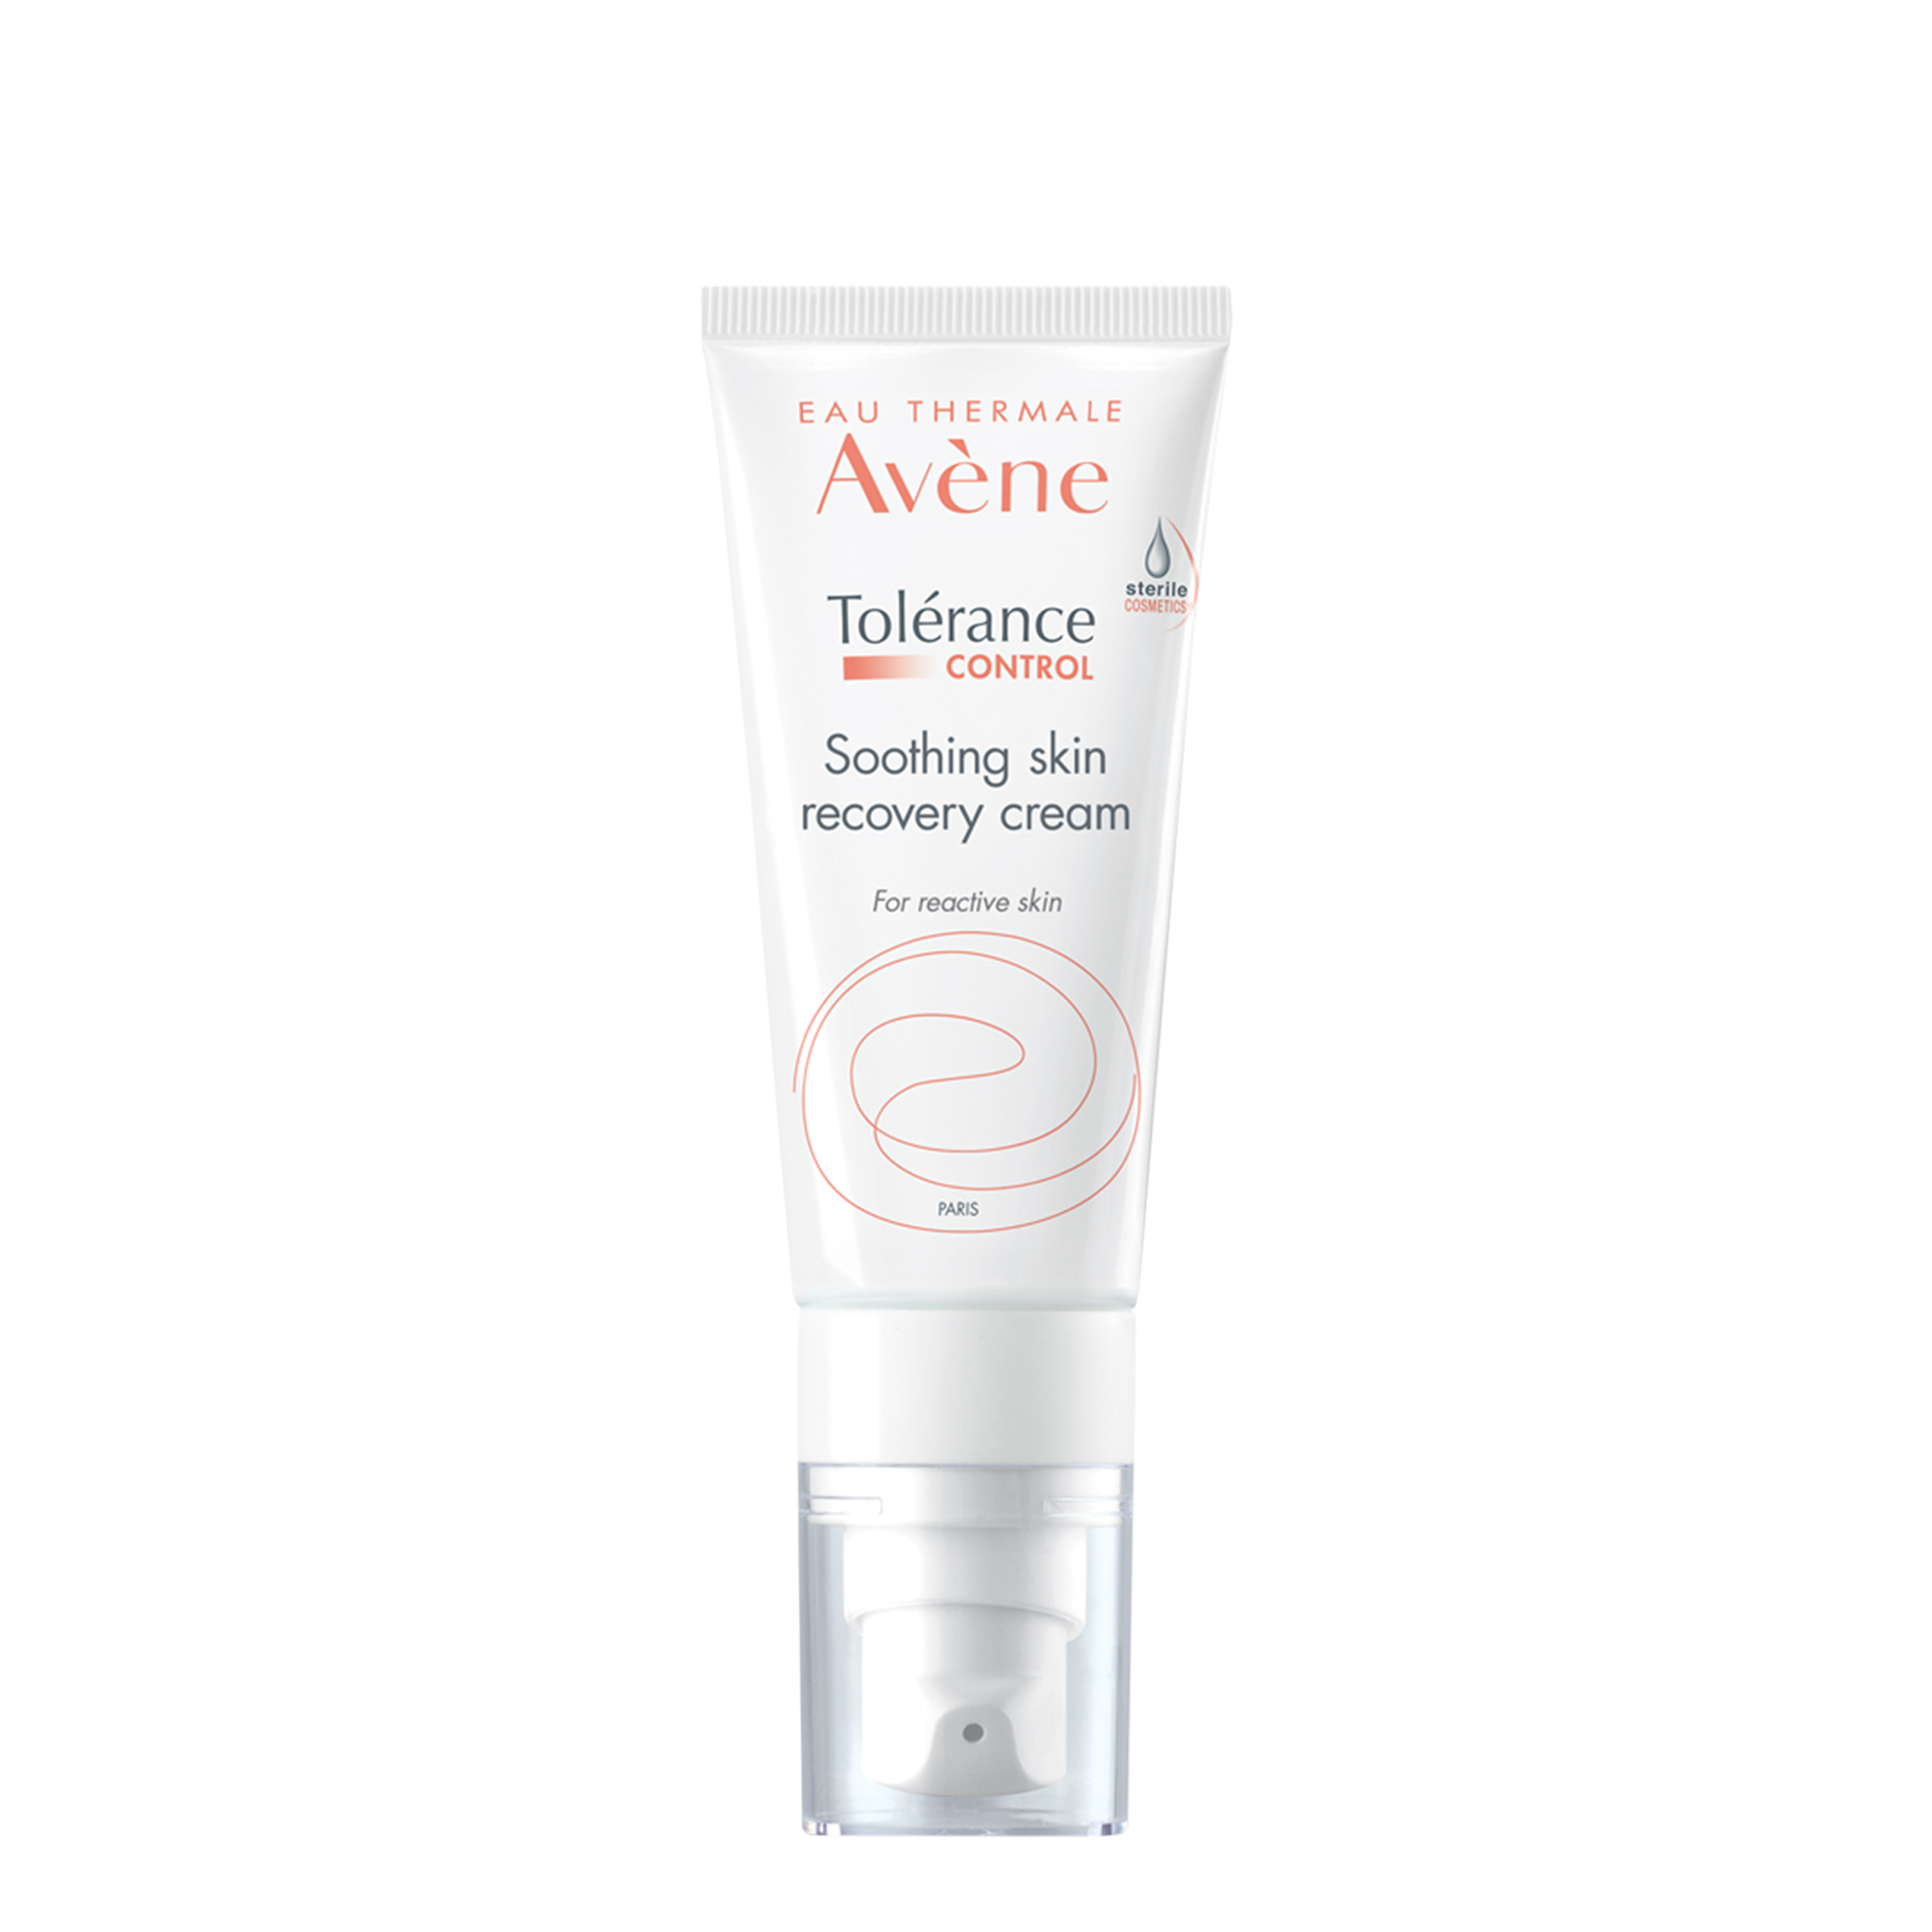 Avène Tolerance CONTROL Soothing Skin Recovery Cream 40ml - Moisturiser for Hypersensitive Skin